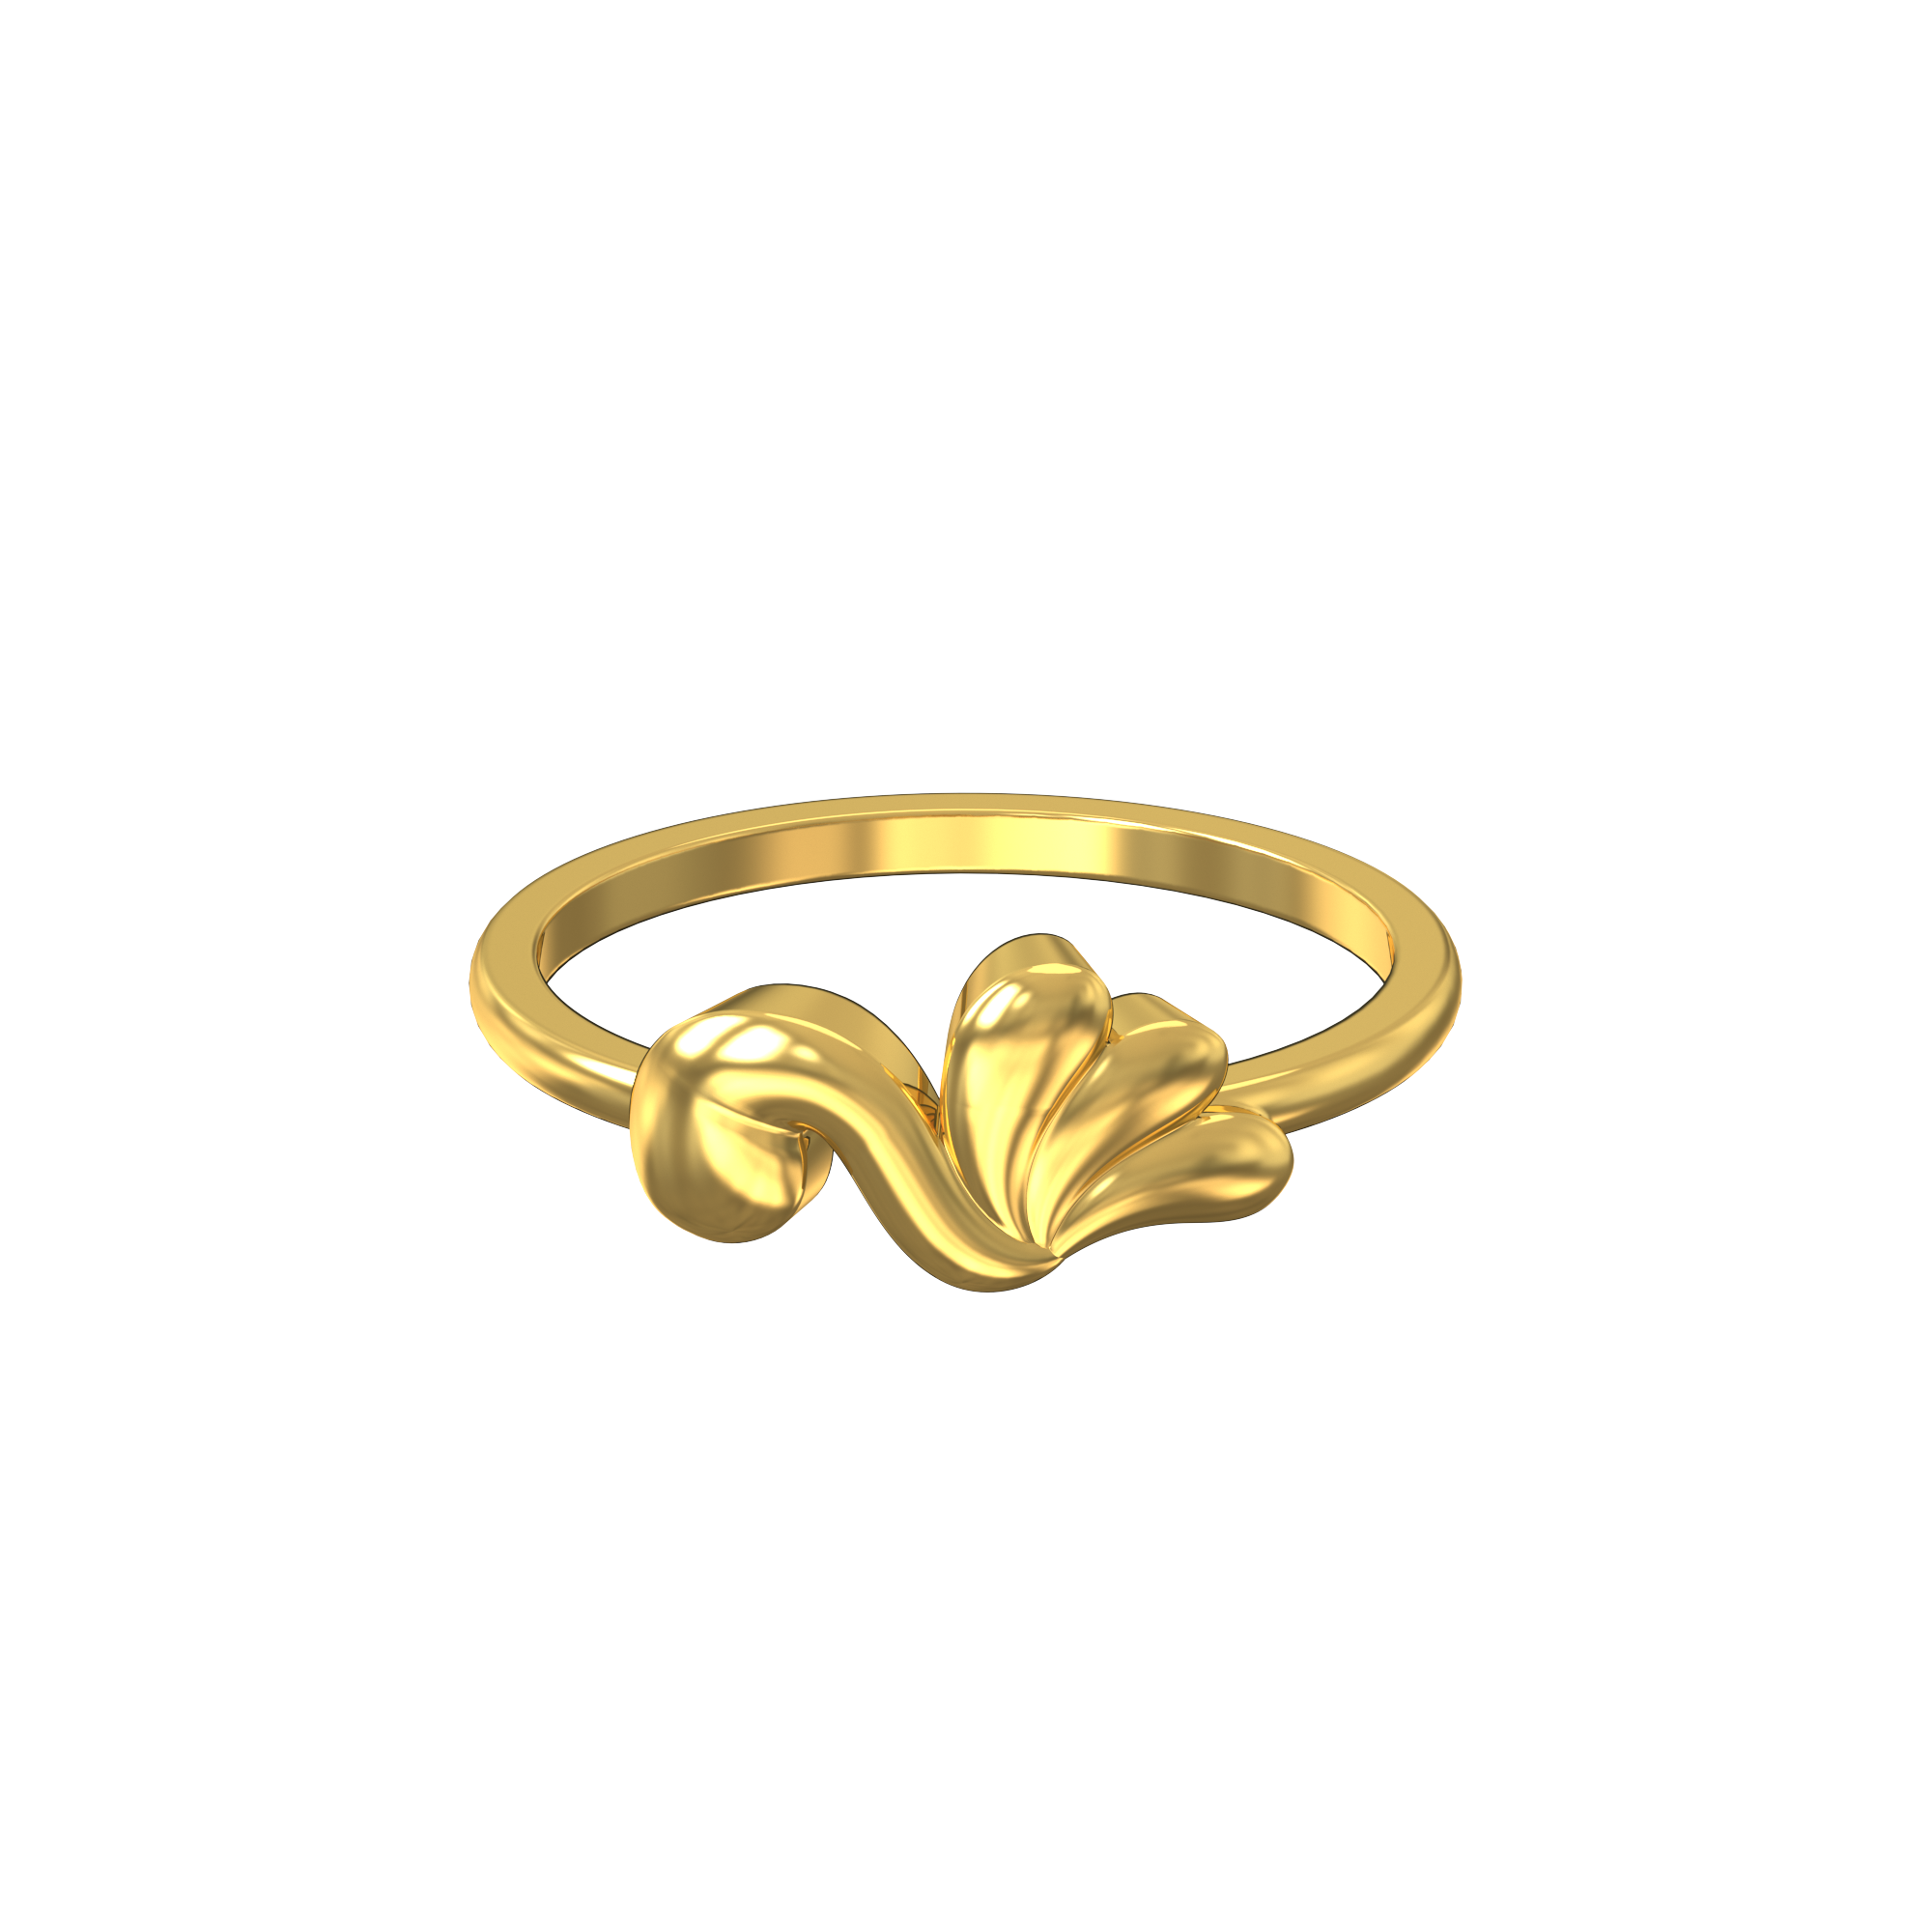 4 G Gold Ring Gold Rings - 46 Latest 4 G Gold Ring Gold Rings Designs @ Rs  3293